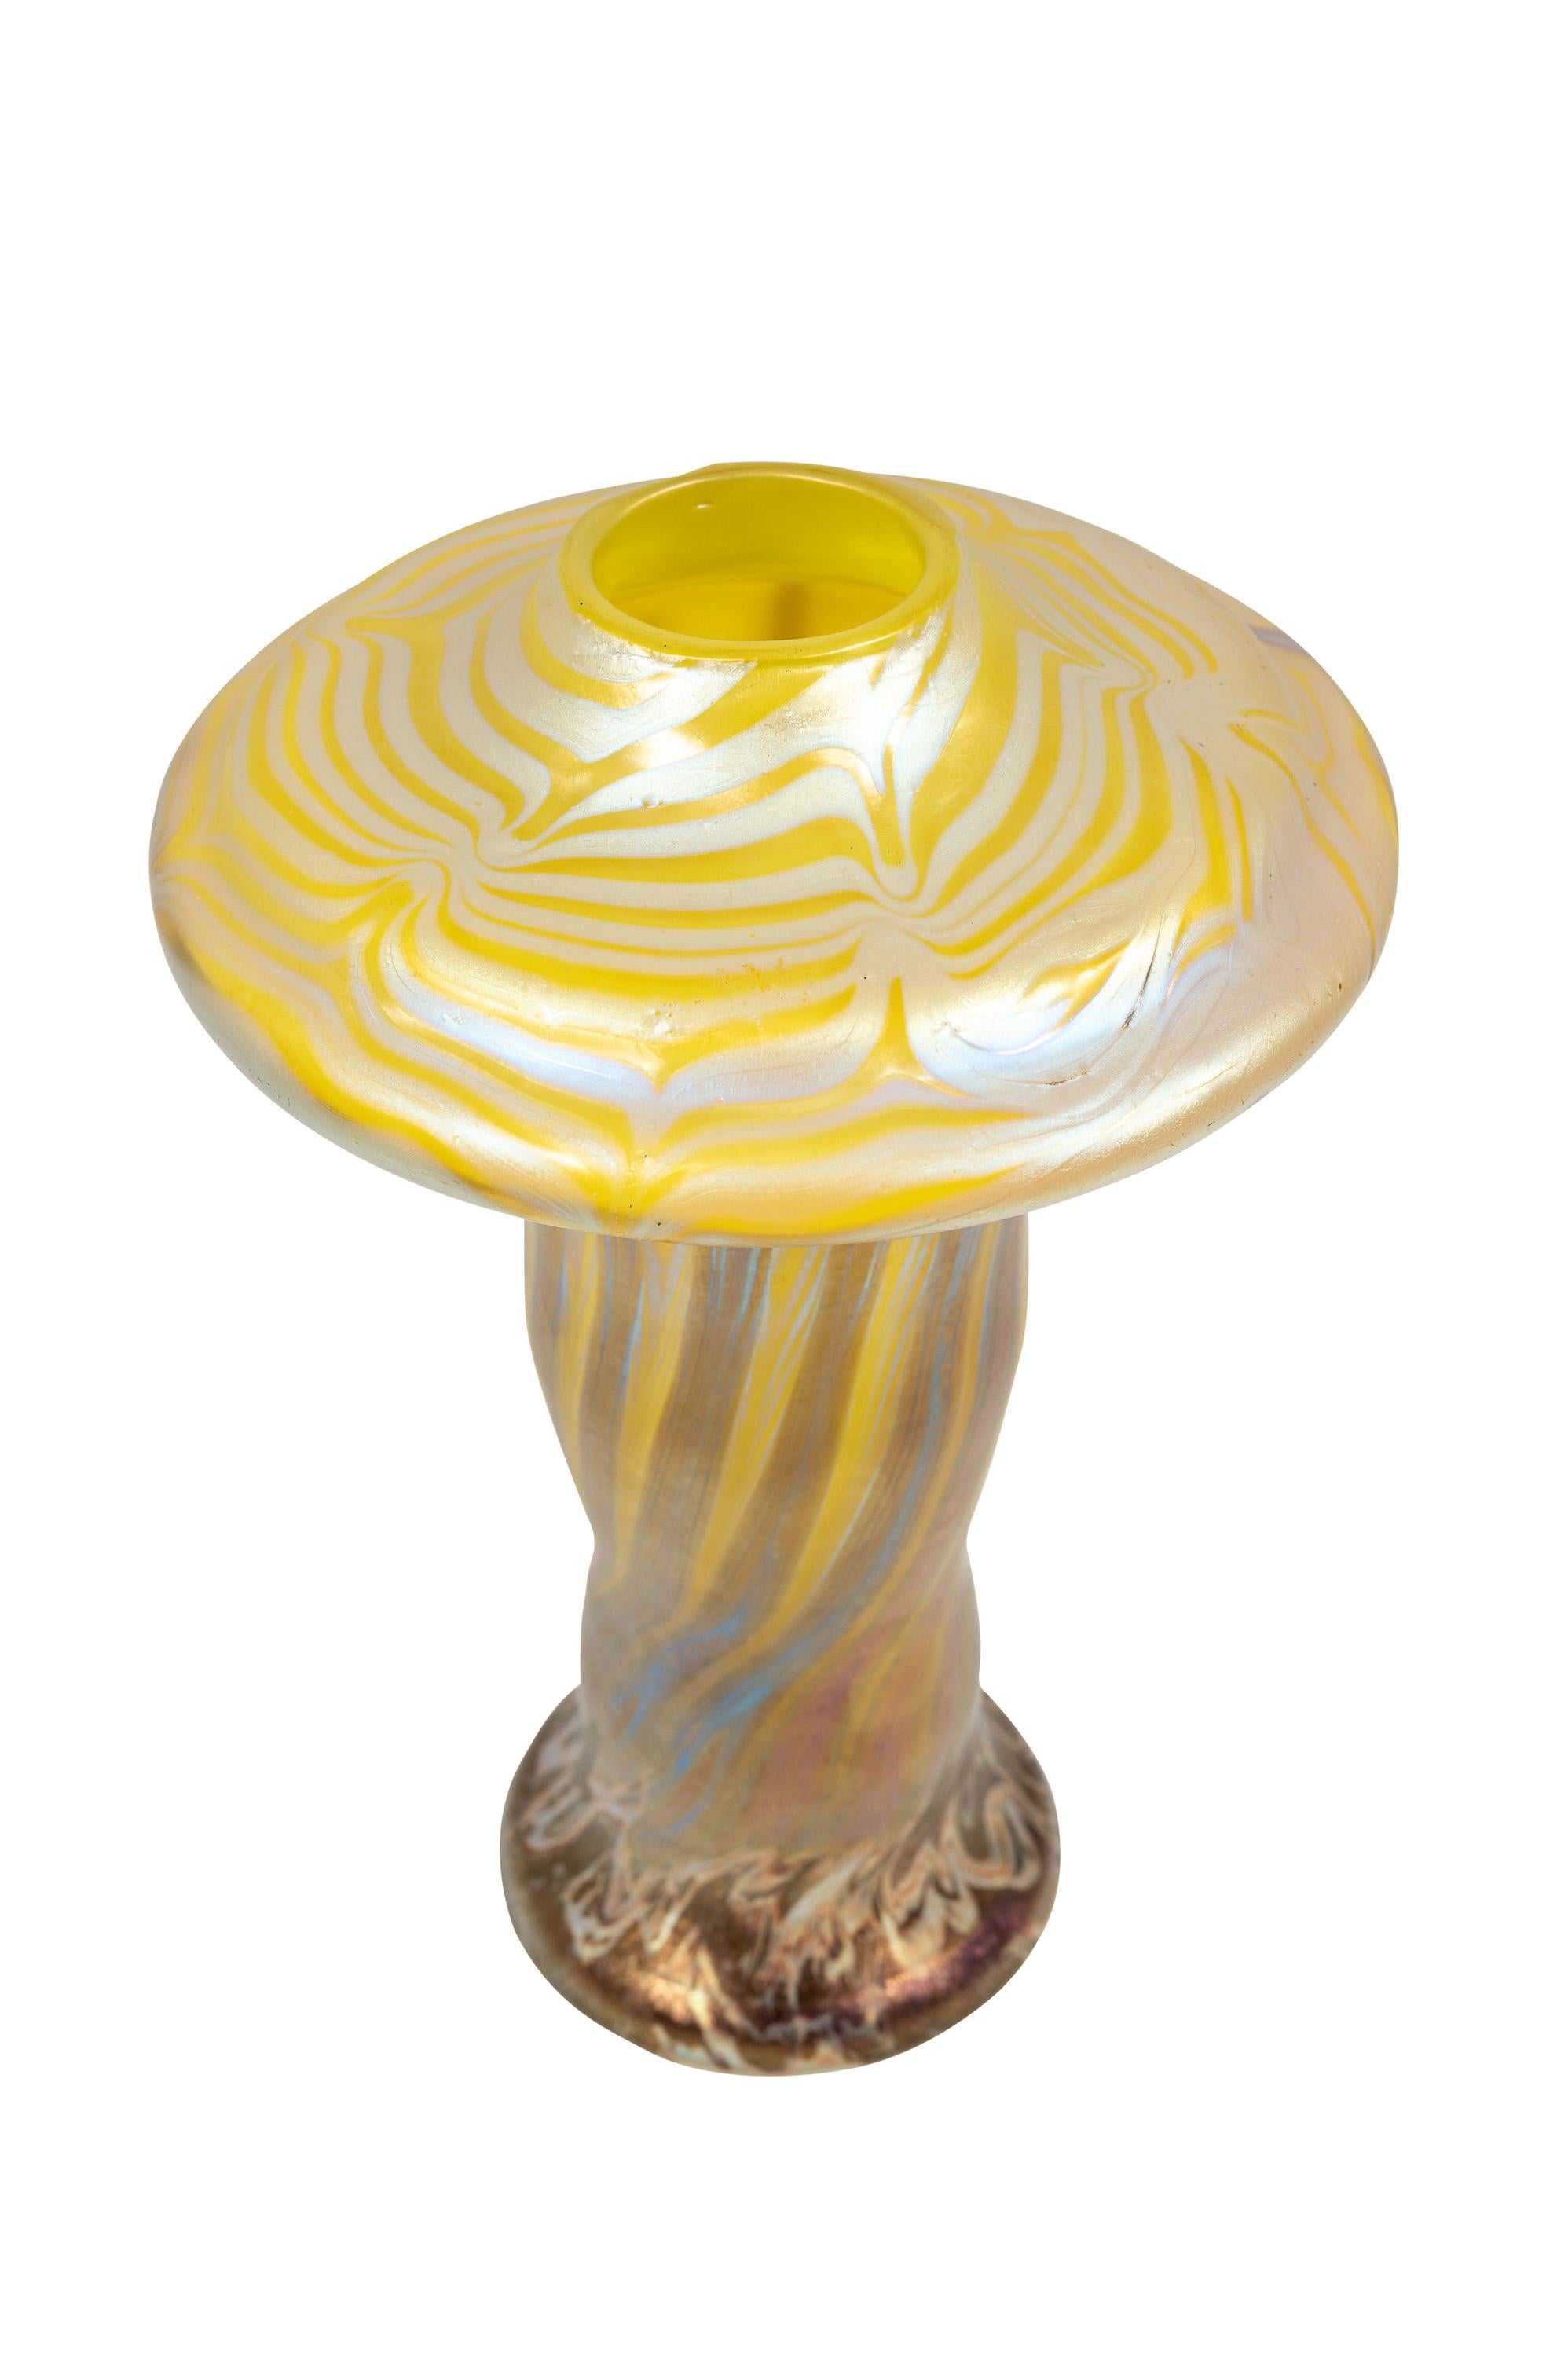 Austrian Signed Glass Vase Loetz circa 1900 Art Nouveau Jugendstil Bohemia Yellow Orange For Sale